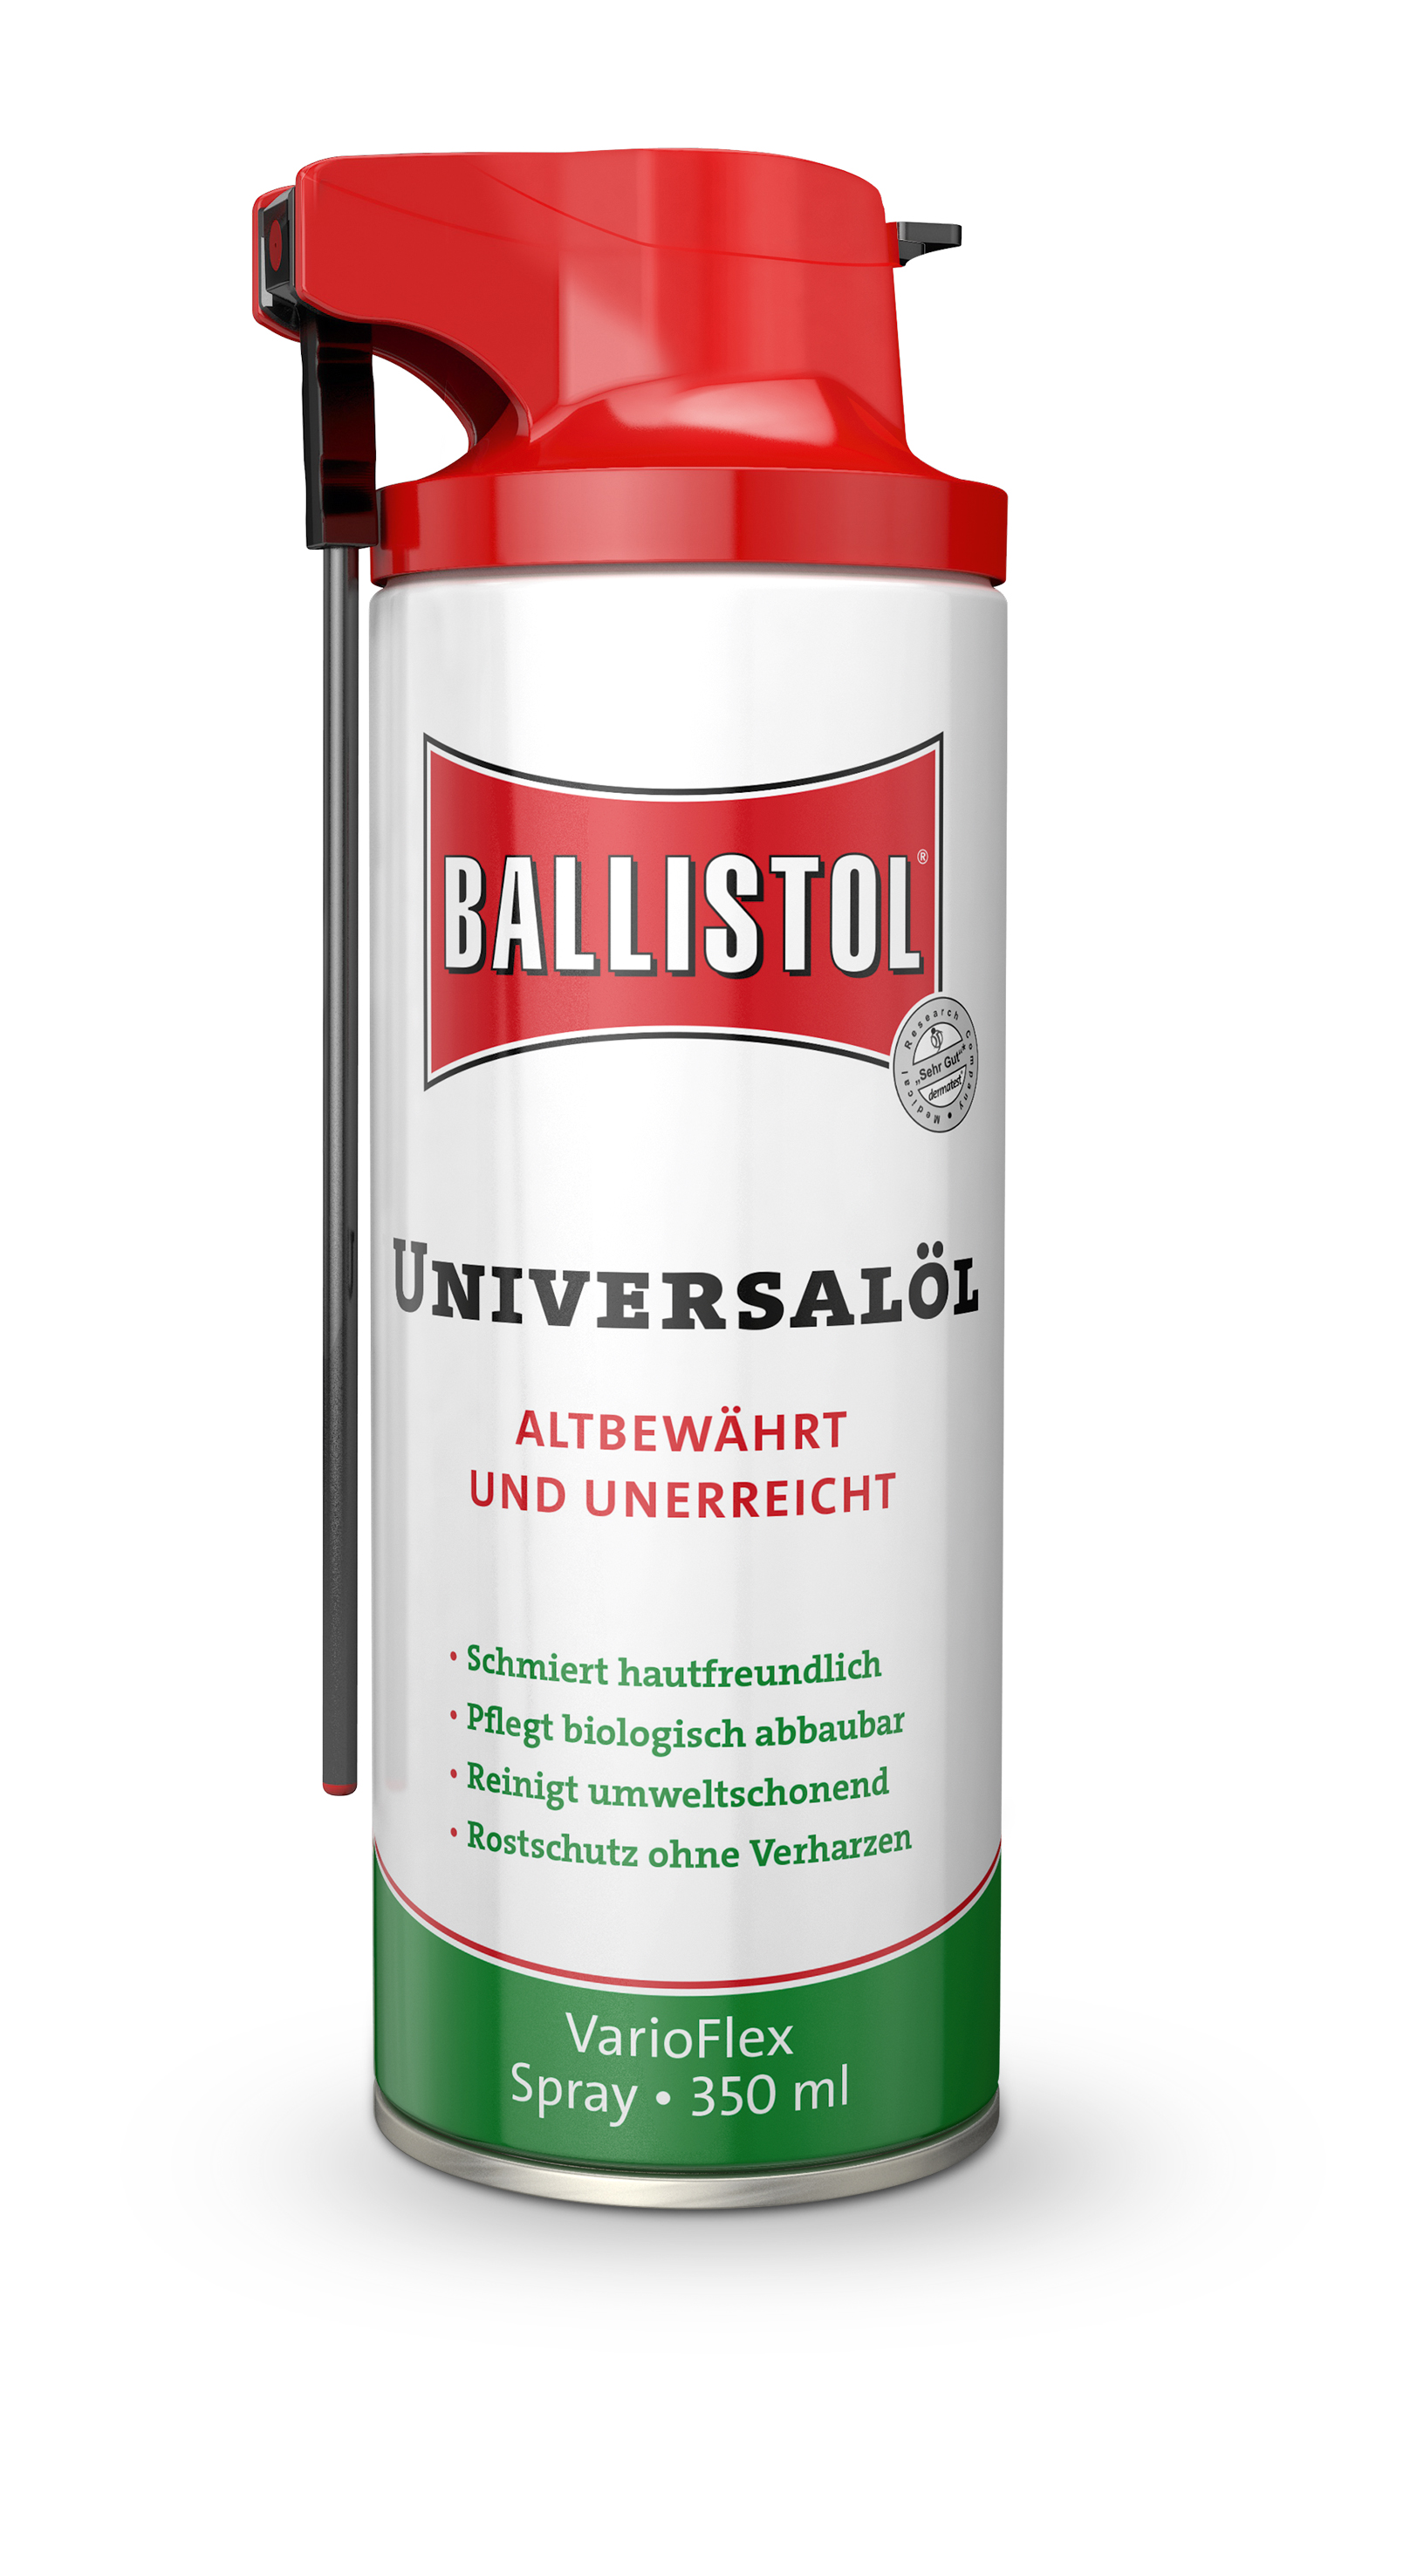 Ballistol Universal-Öl Spray VarioFlex Sprührohr